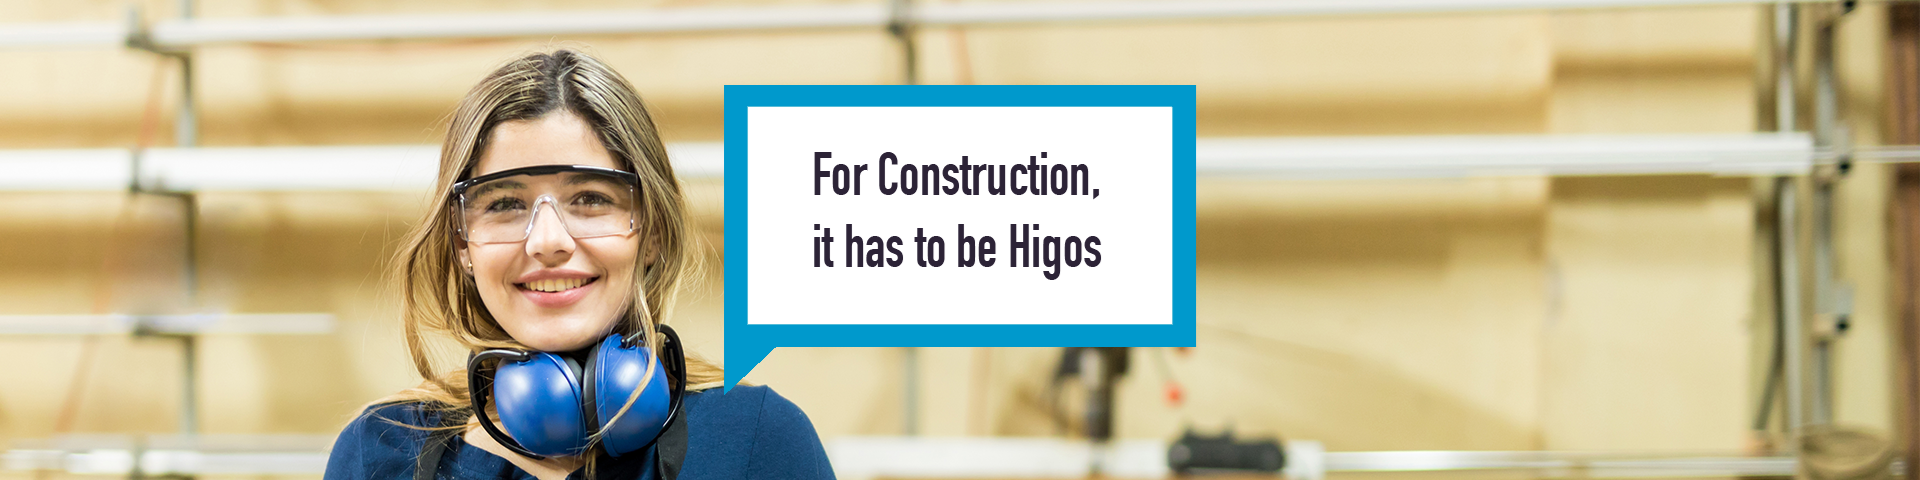 Higos business insurance construction